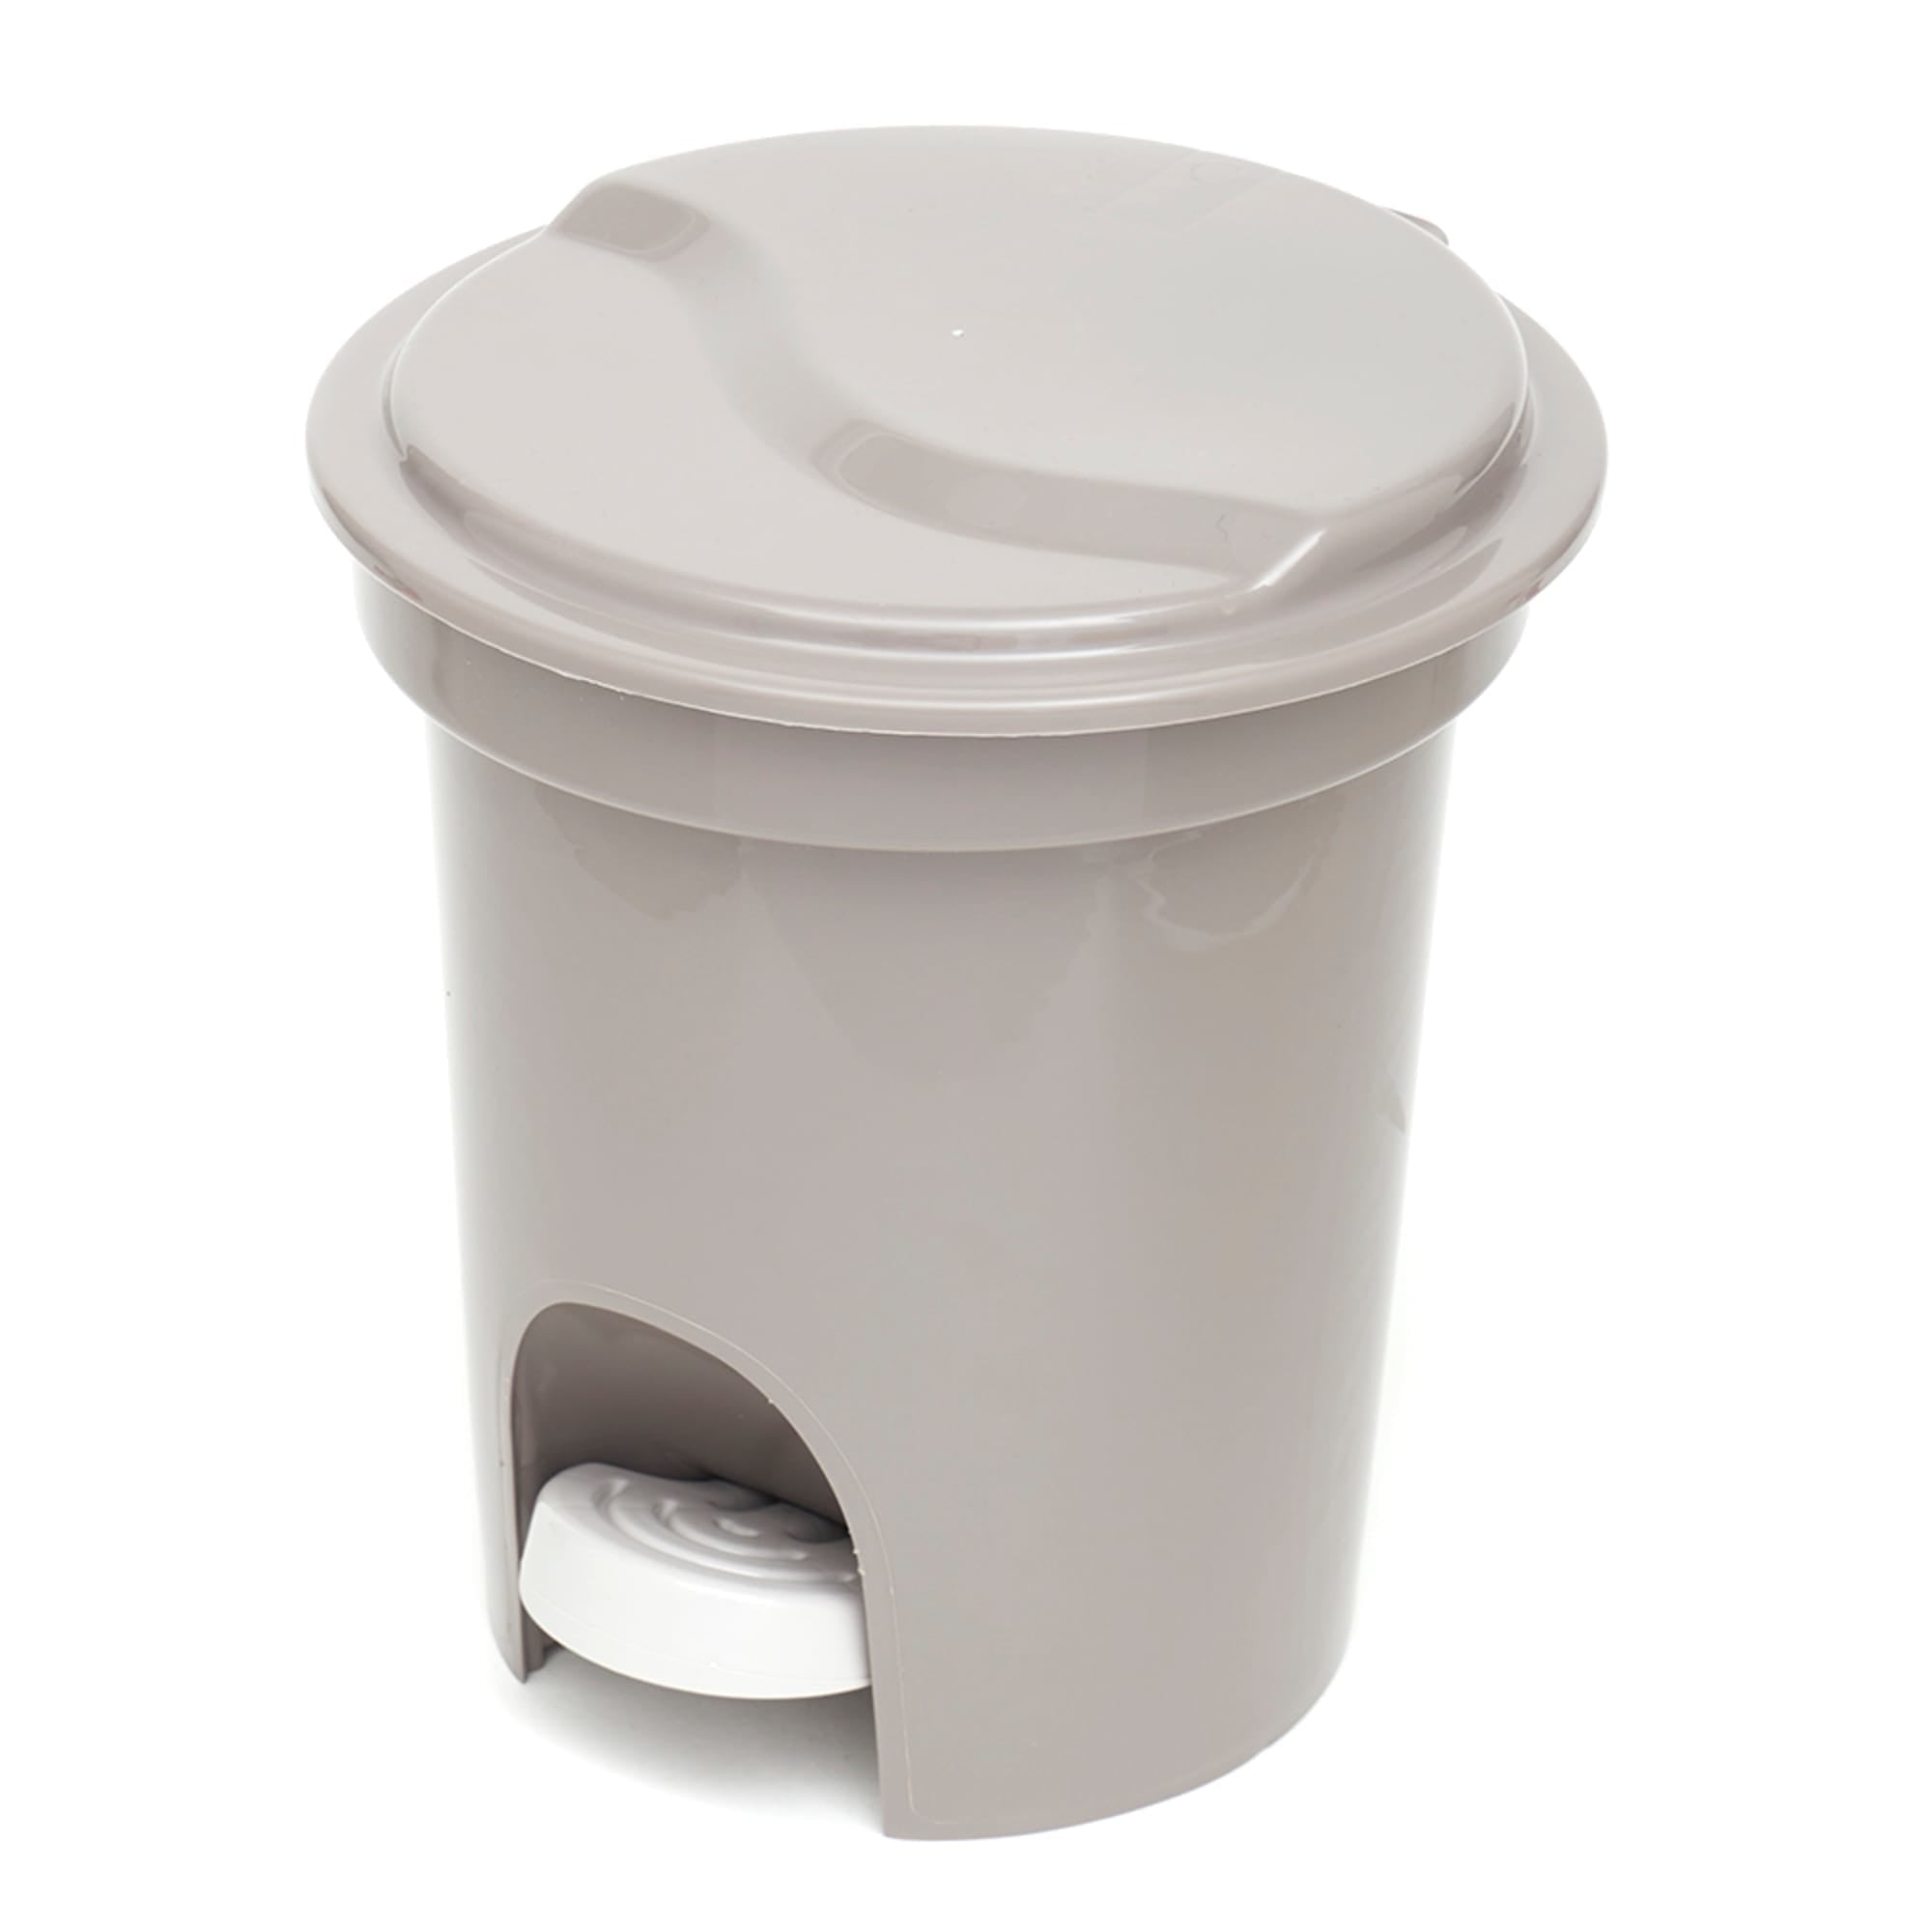 Home Basics 8 Liter Plastic Step on Waste Bin, Grey $6 EACH, CASE PACK OF 6